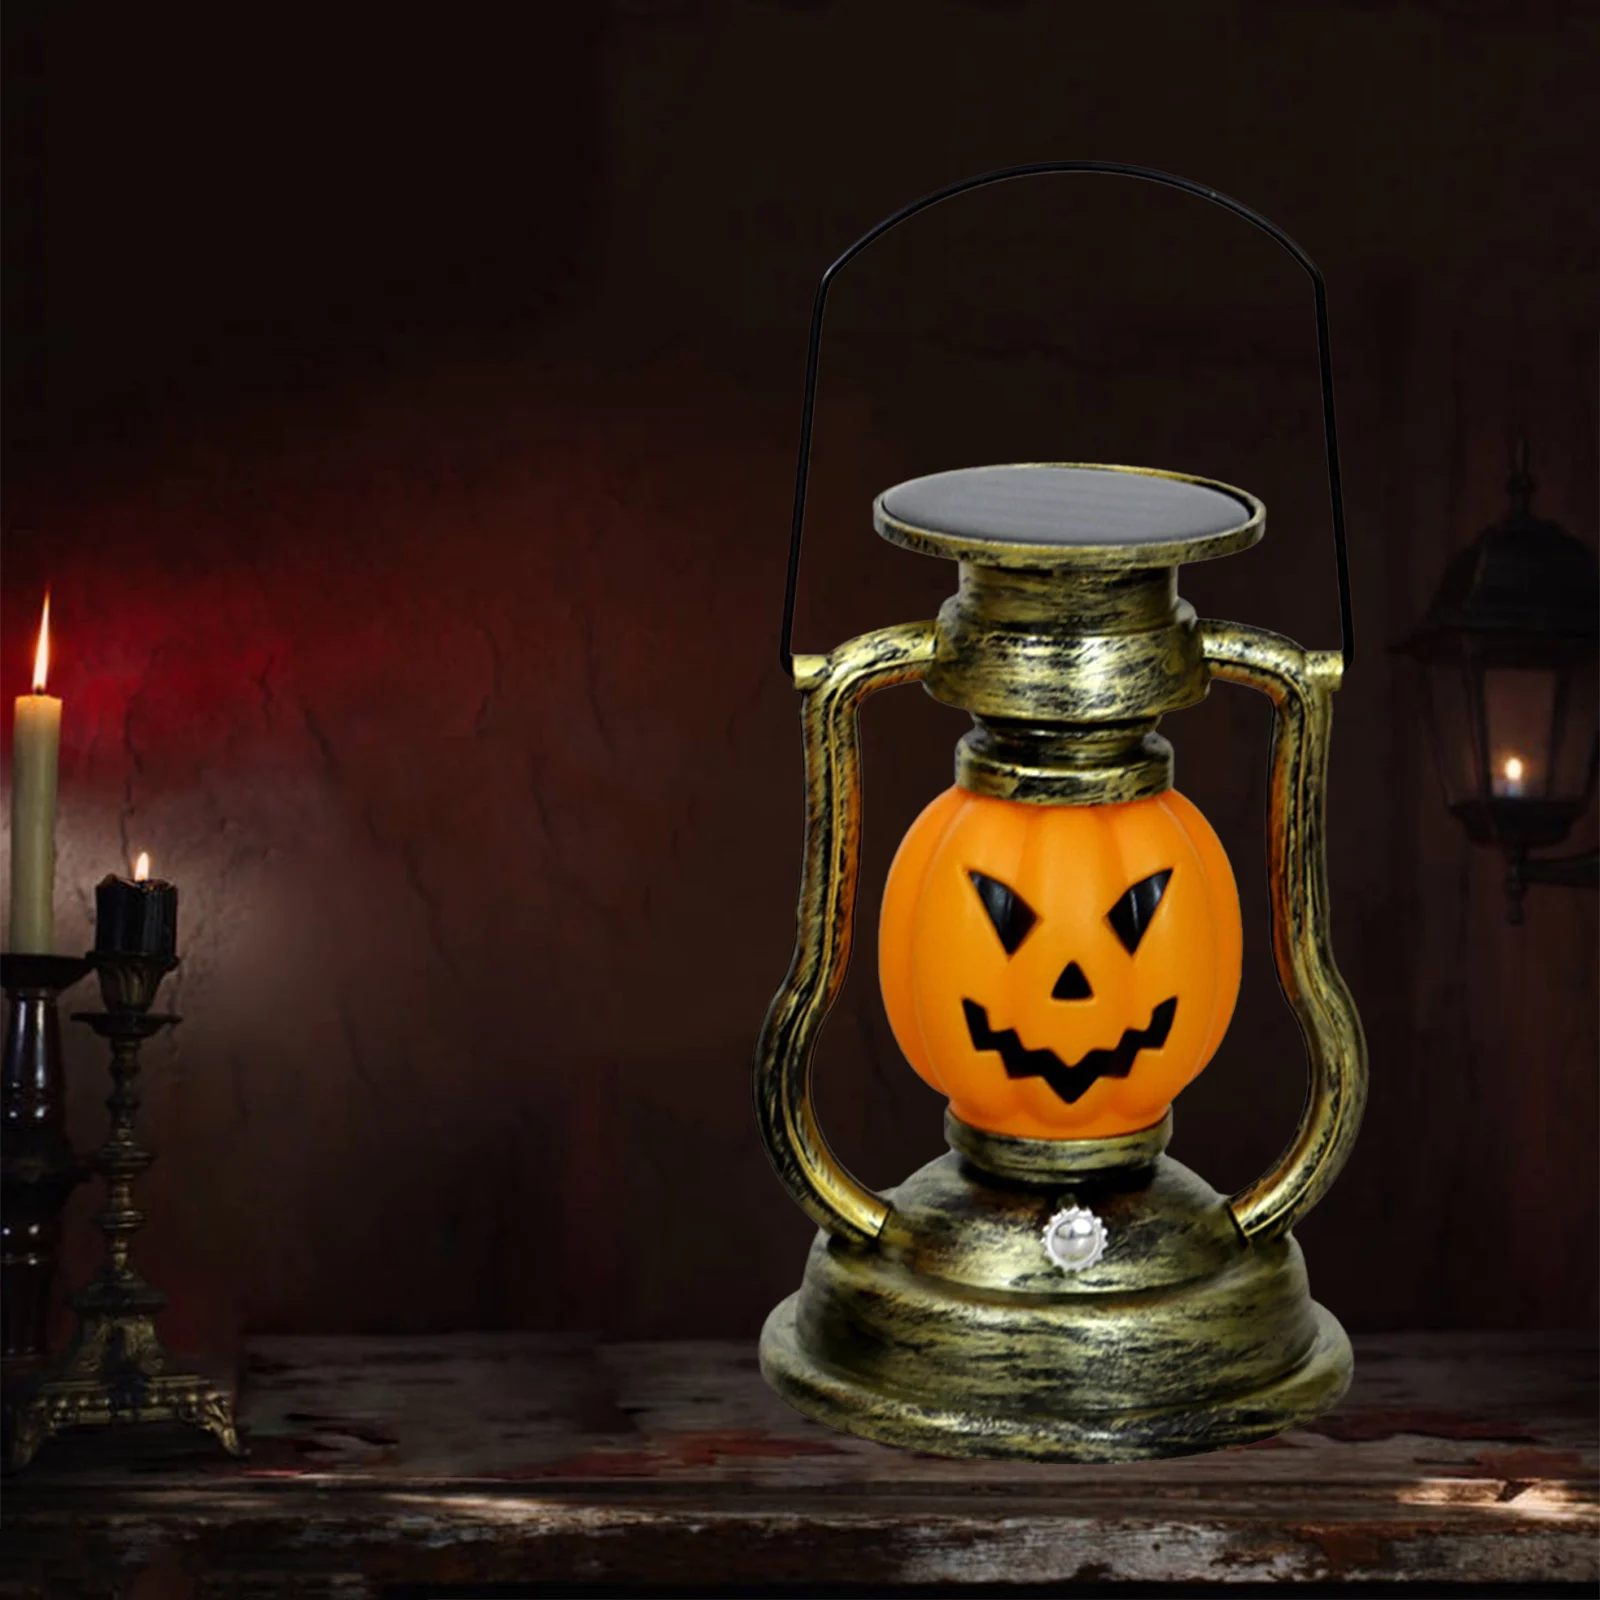 Battery/Solar LED Lantern Pumpkin Skull Decor Light Props for Fall Harvest Halloween Decorative Dining Room Decor Lighting